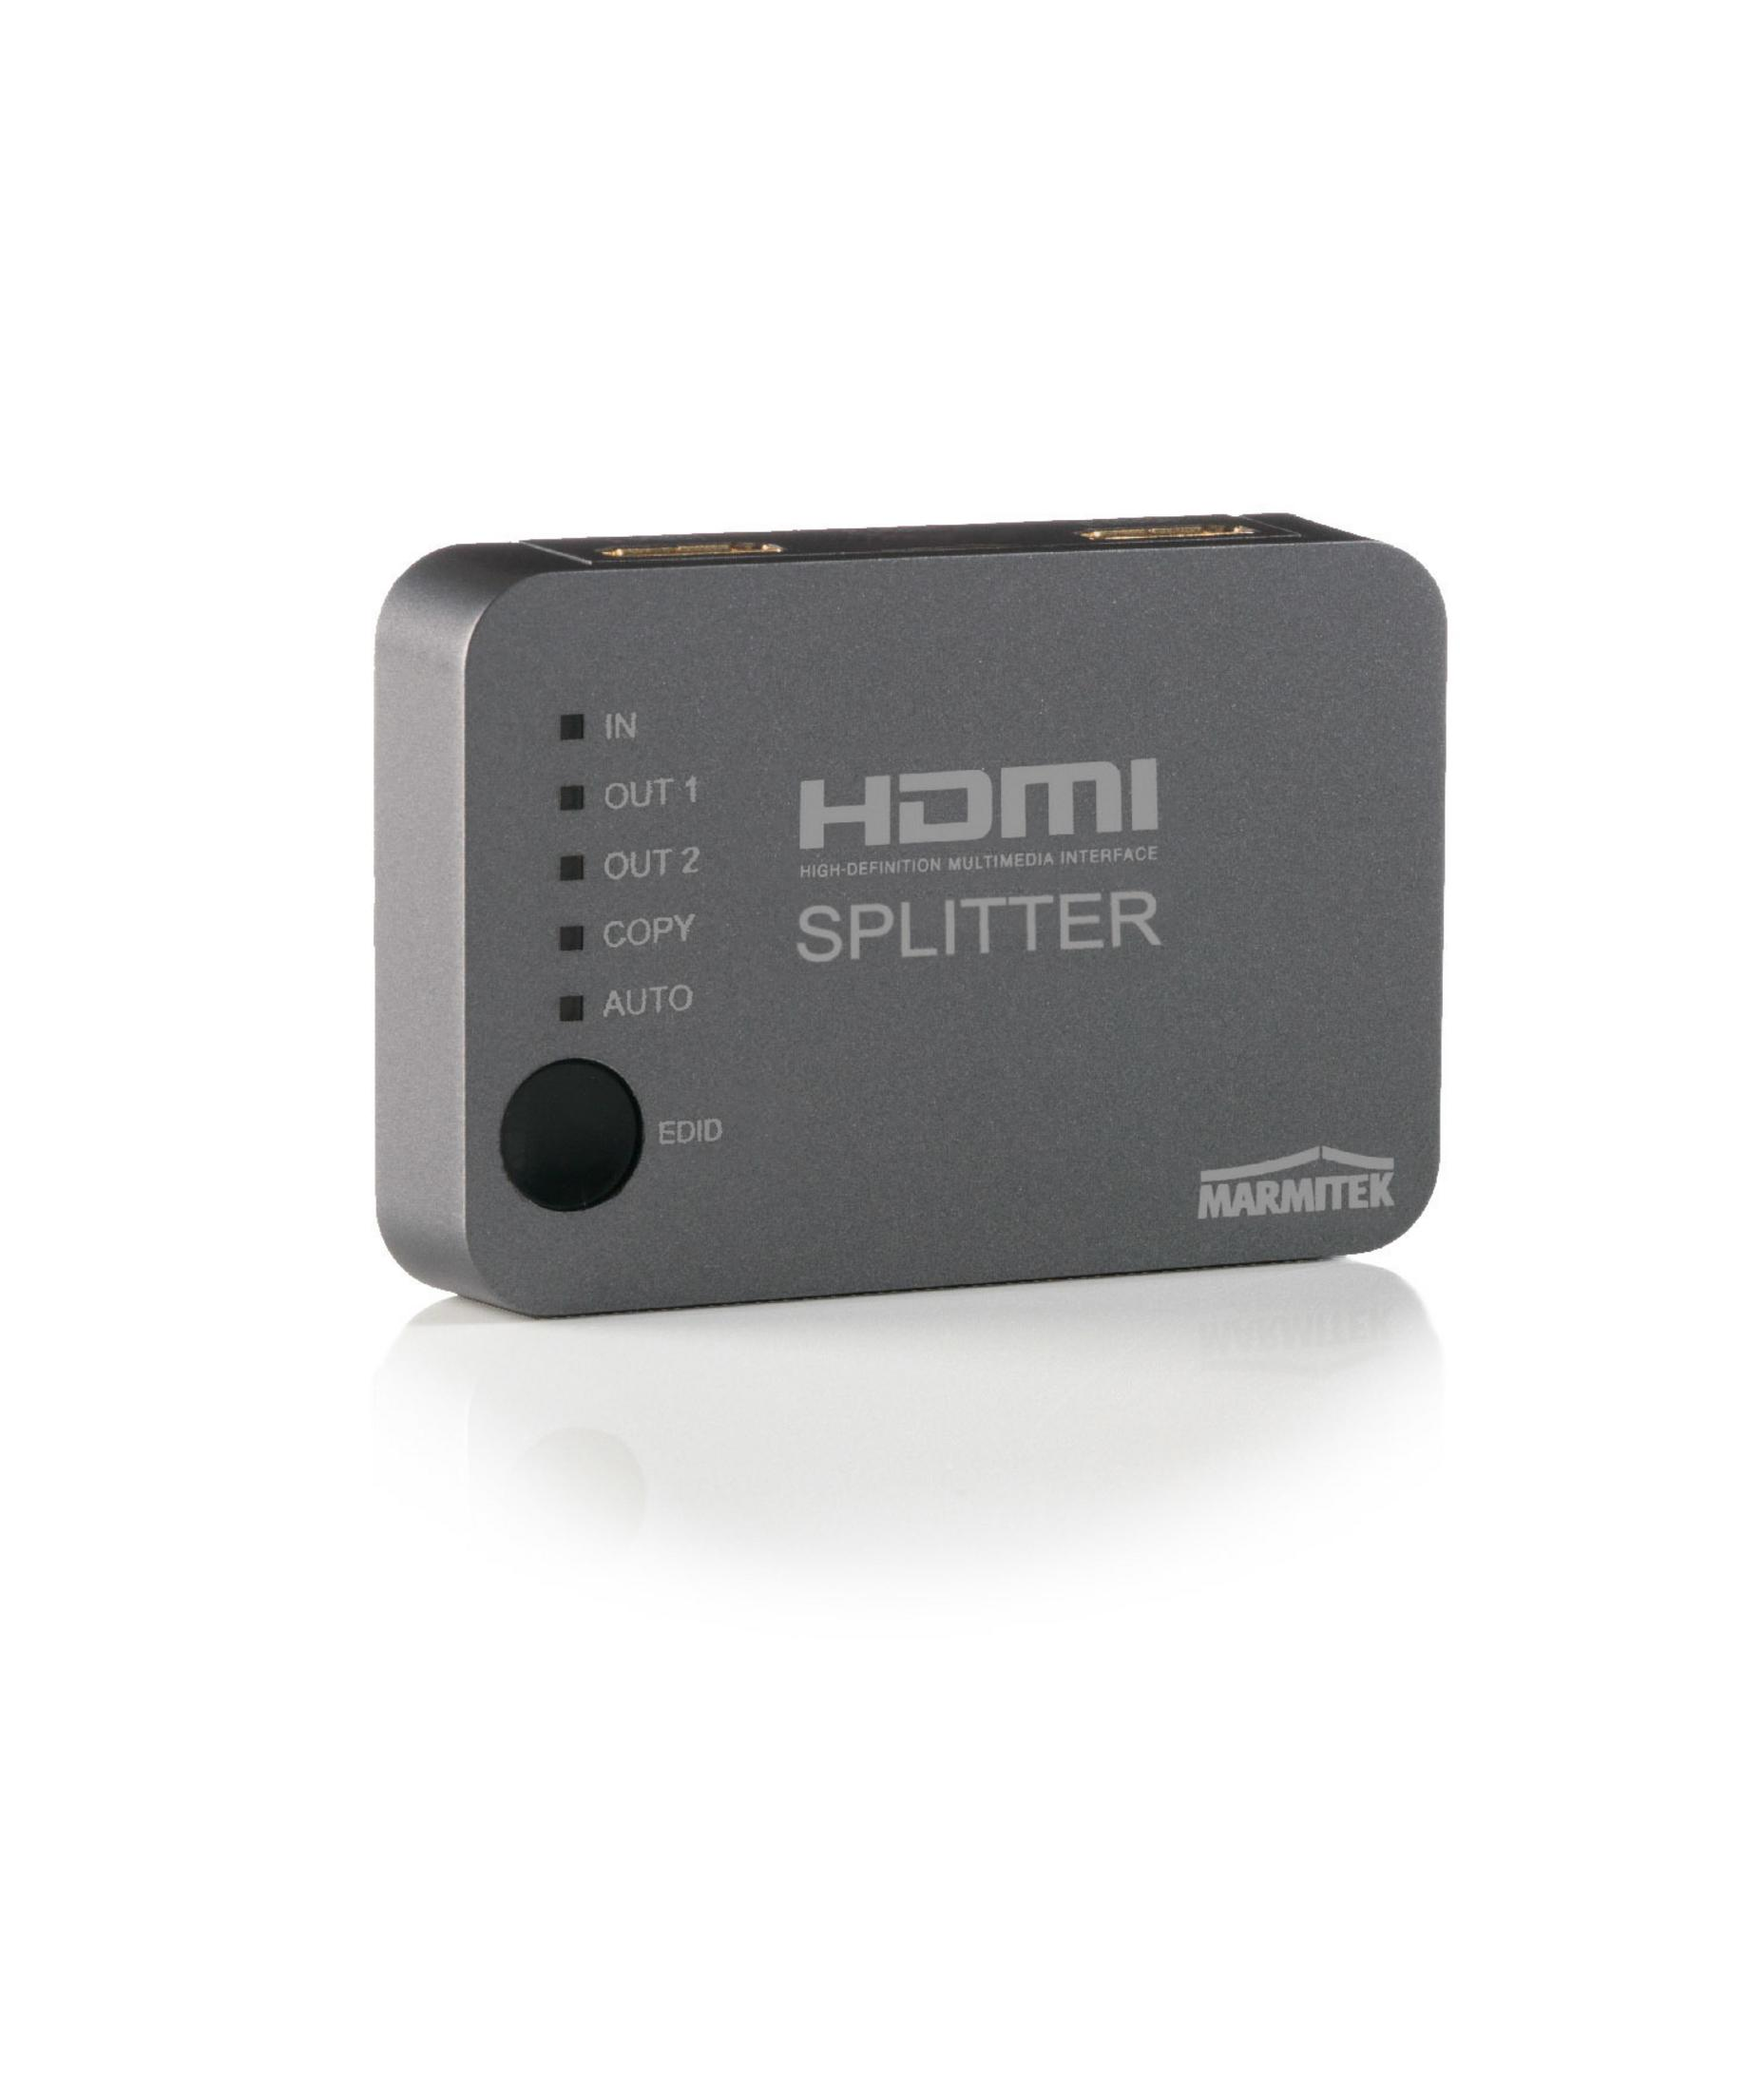 HDMI 312 SPLIT Splitter UHD MARMITEK